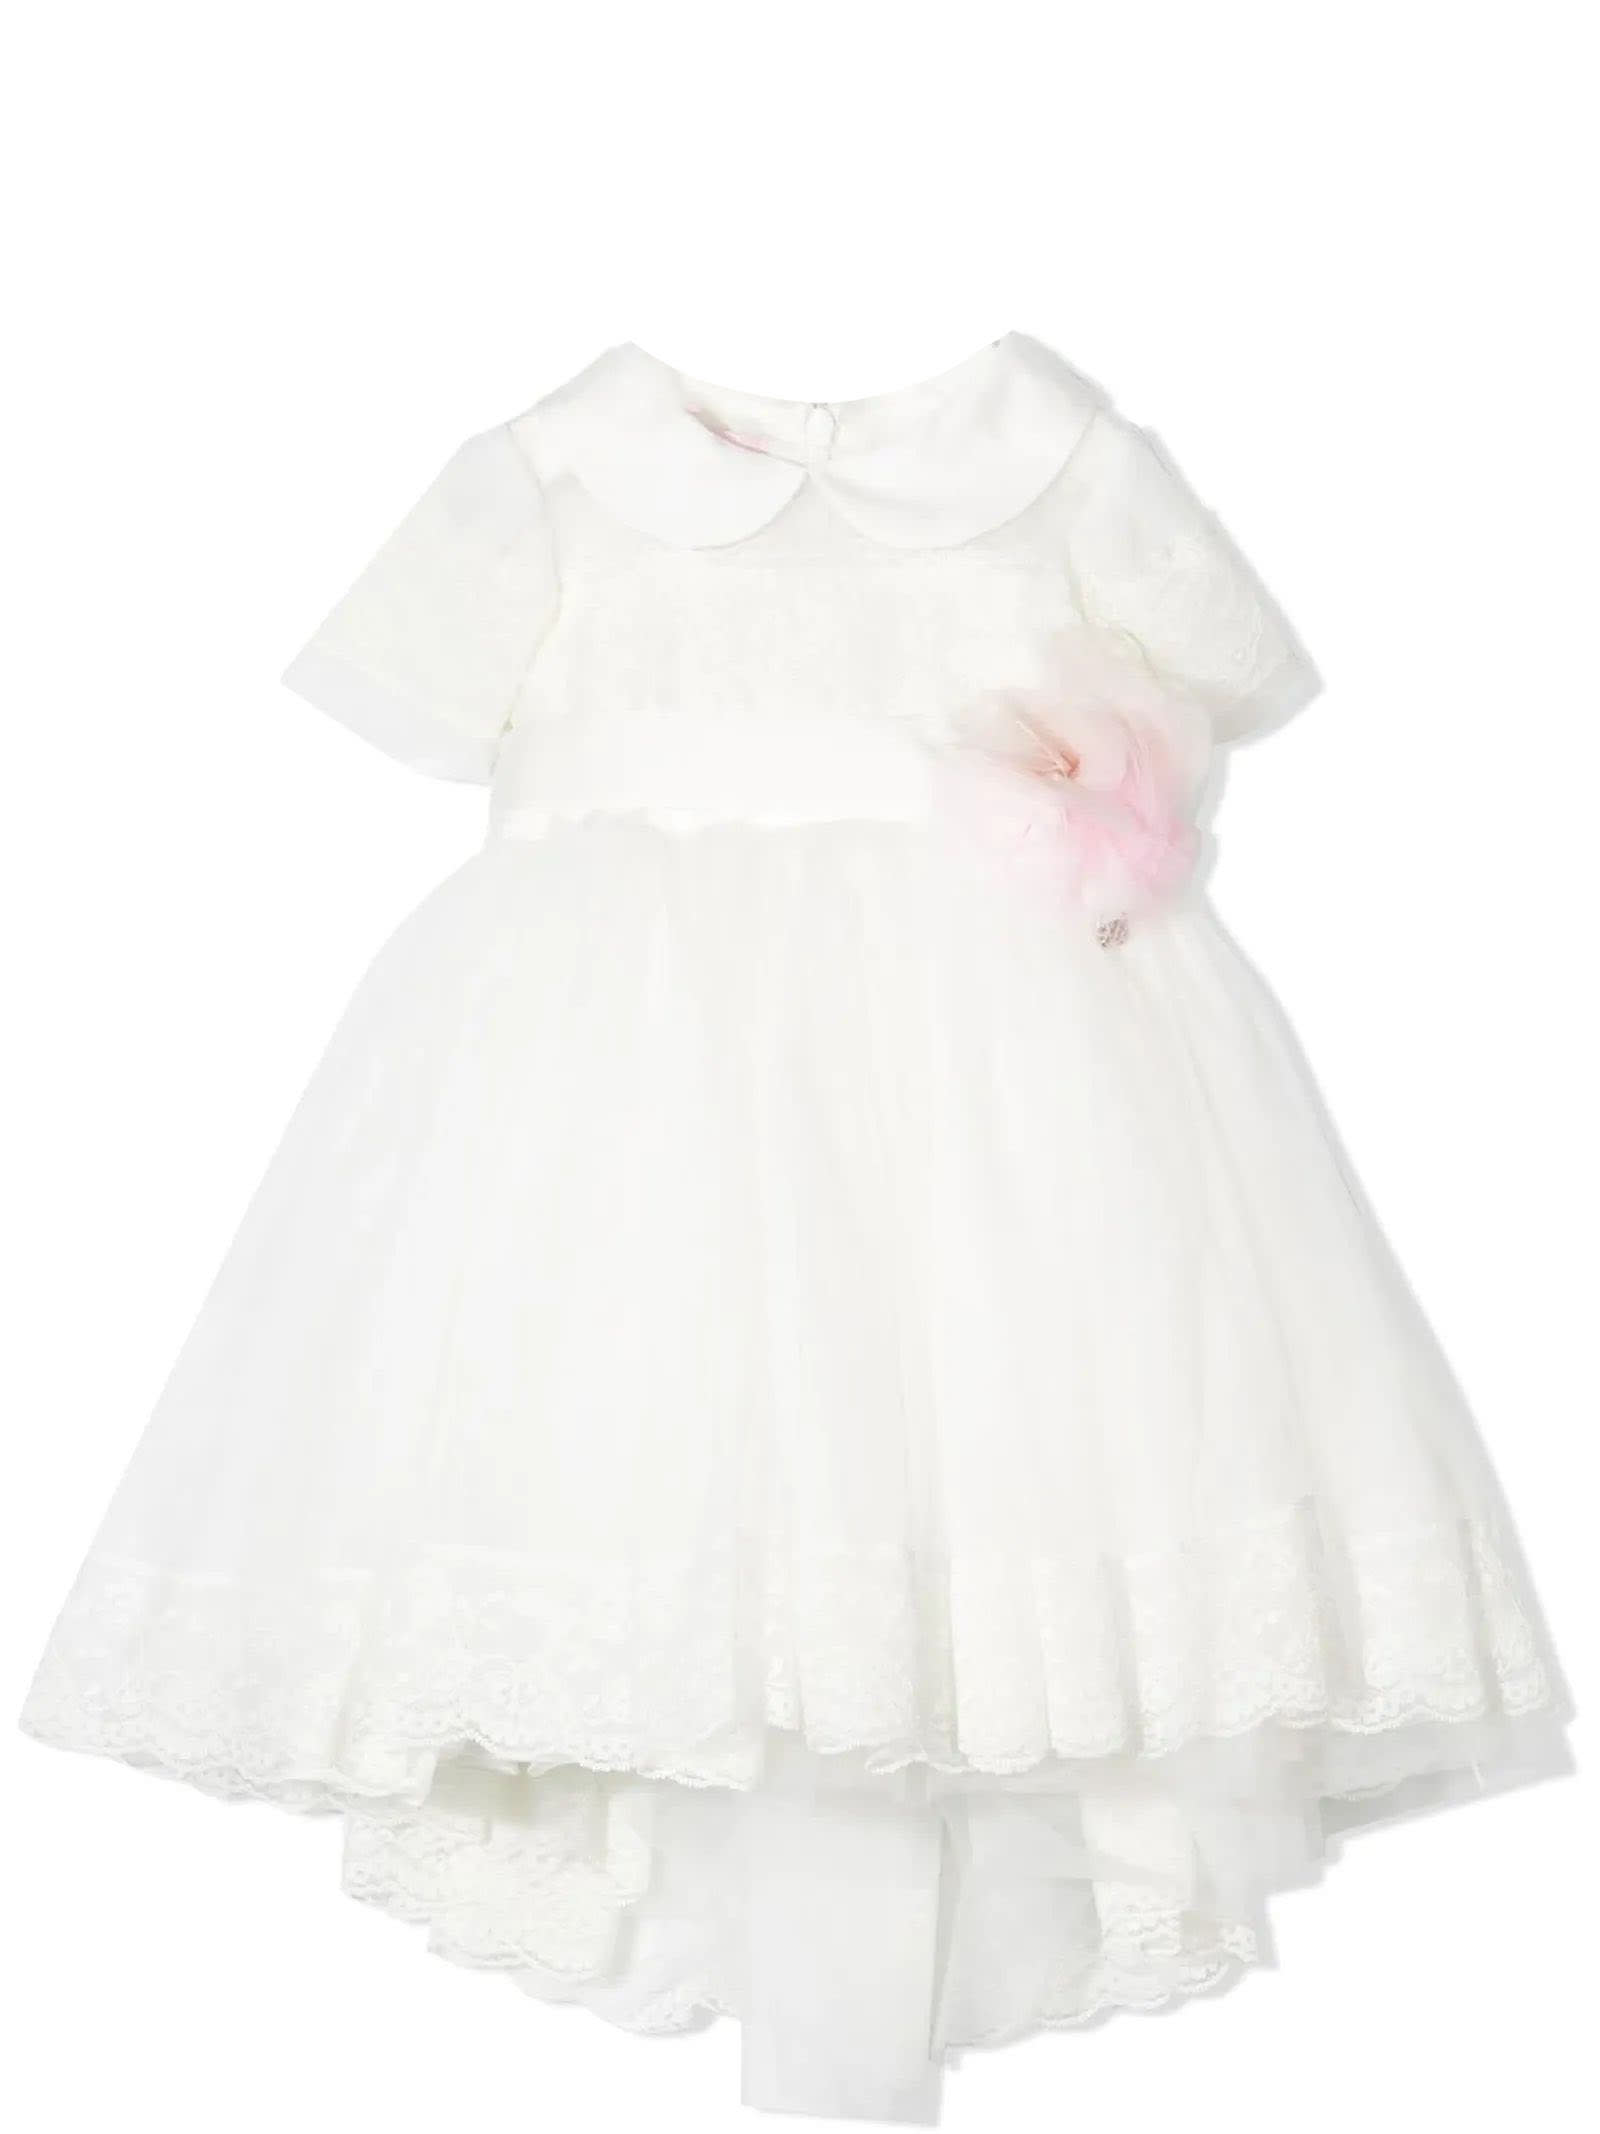 Miss Blumarine White Cotton Blend Tulle Dress